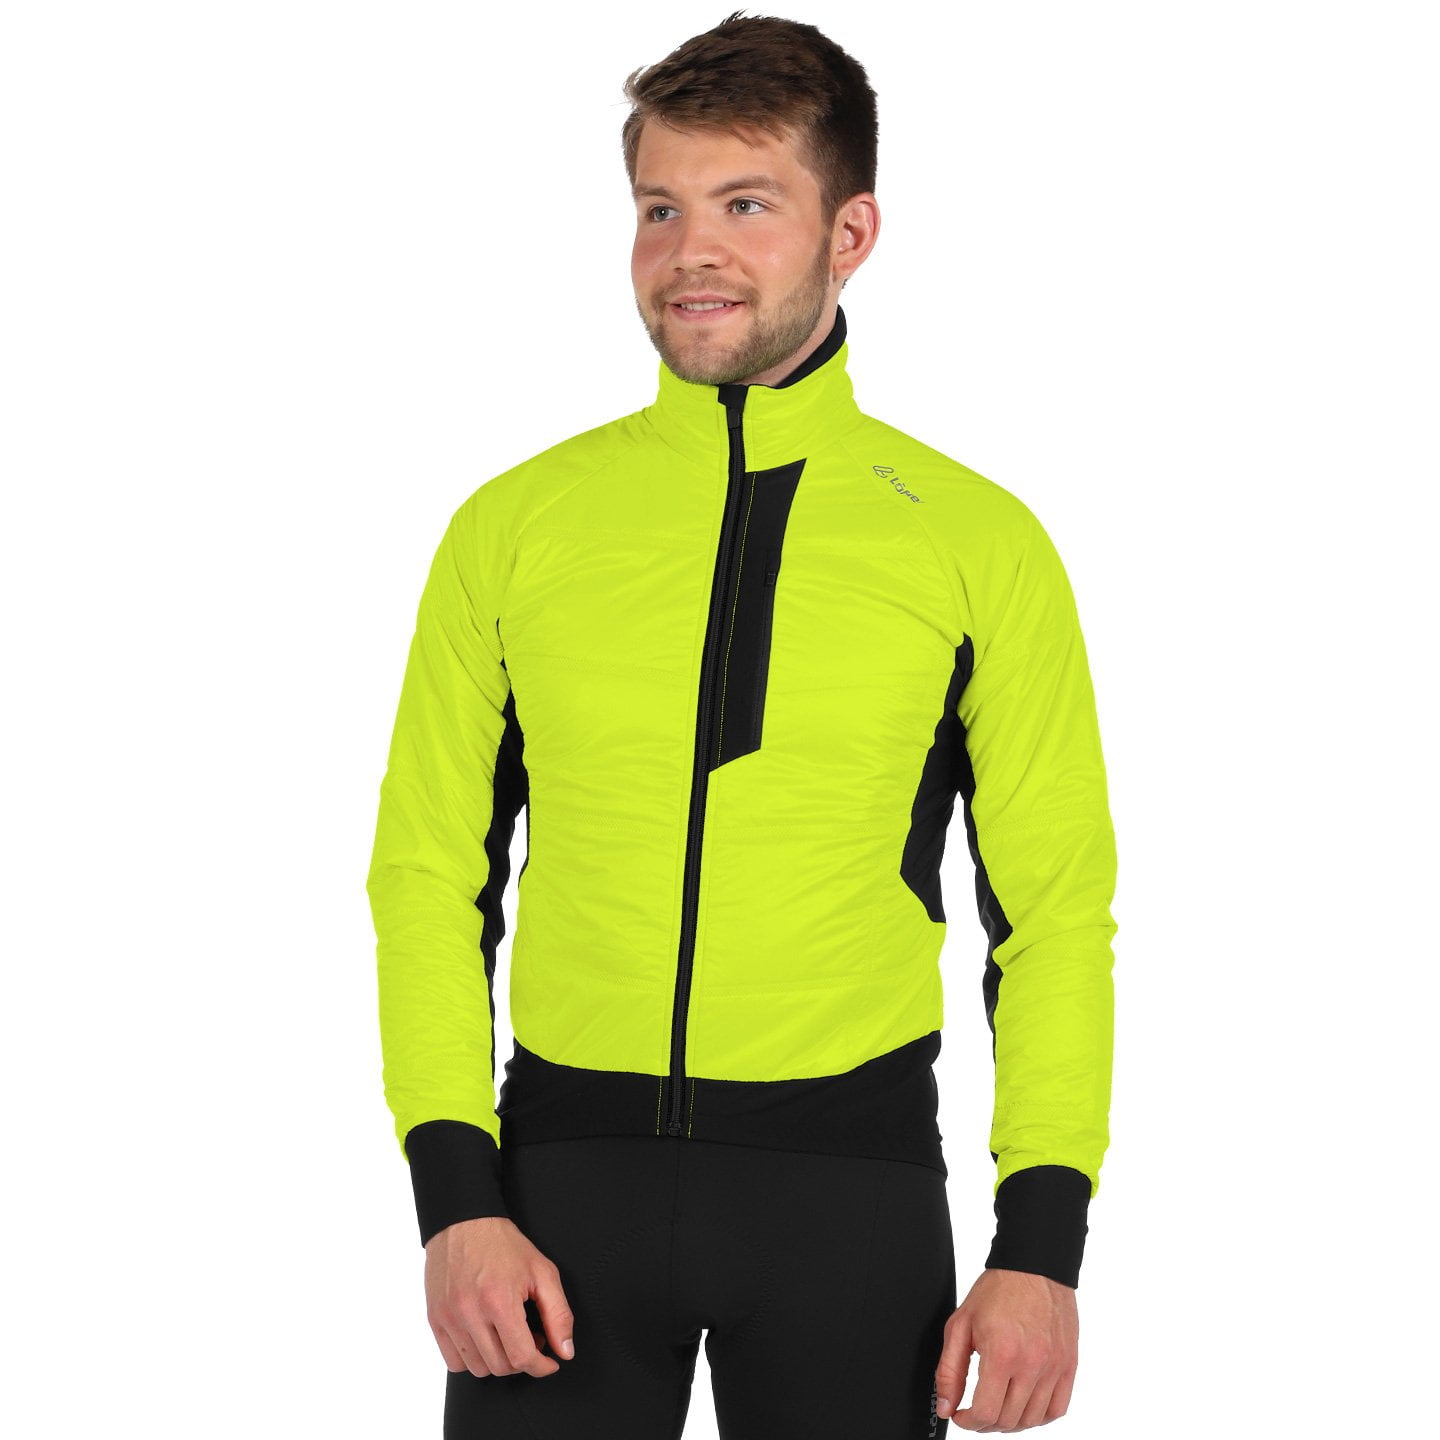 LOFFLER Hotbond PL60 Winter Jacket Thermal Jacket, for men, size S, Winter jacket, Bike gear